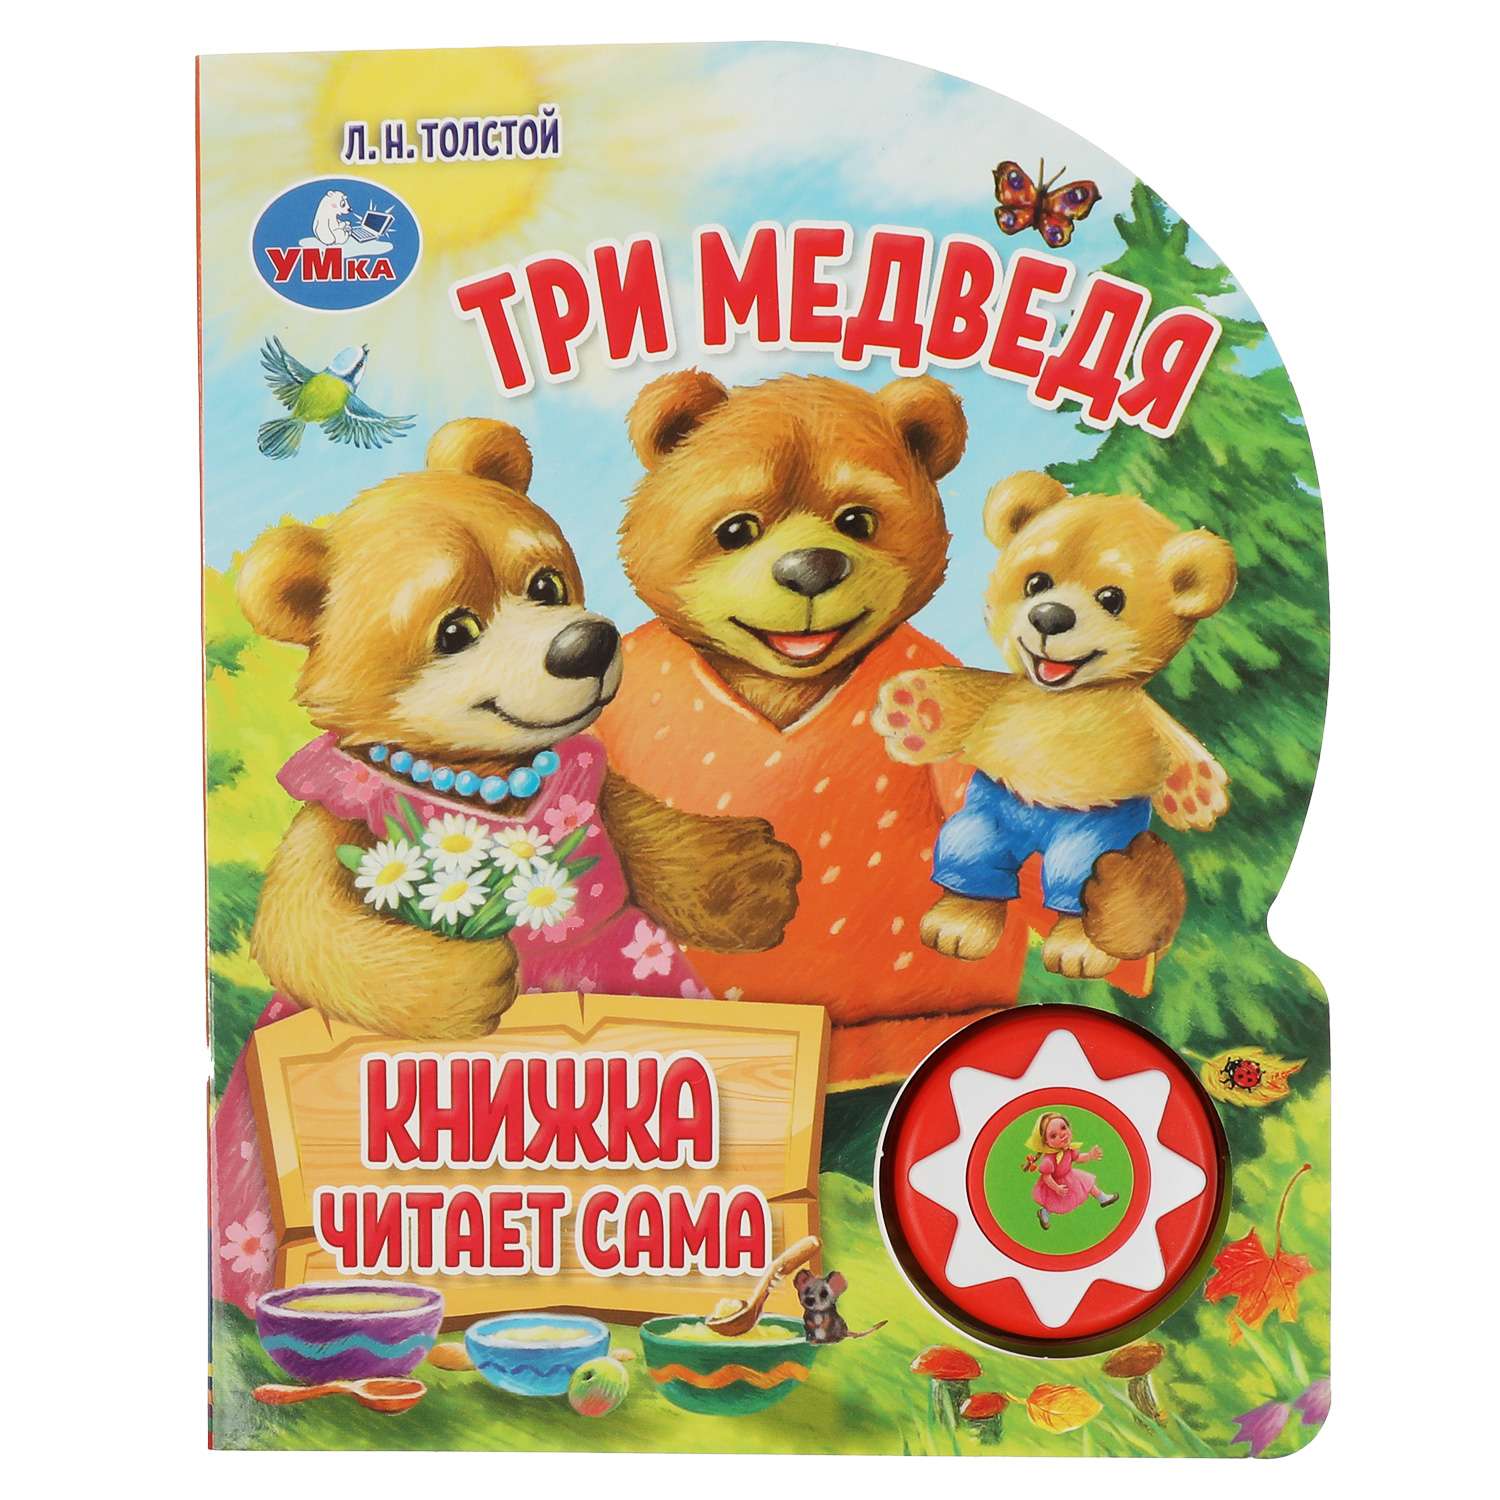 Музыкальная книга УМка Три медведя - фото 1